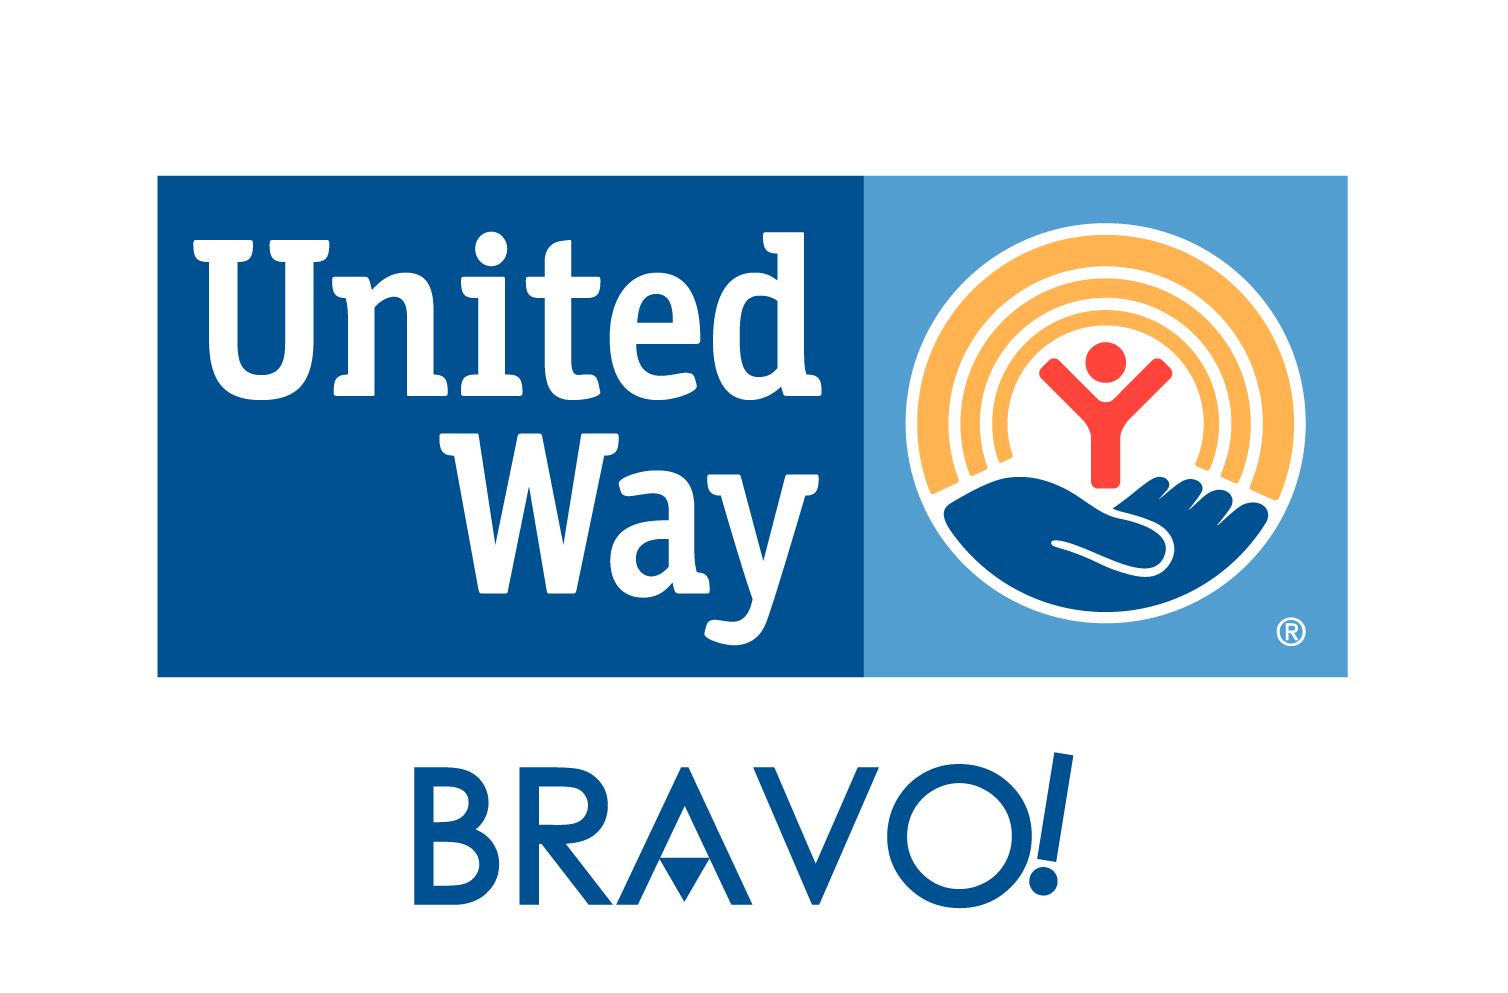 United Way Bravo! award for marketing